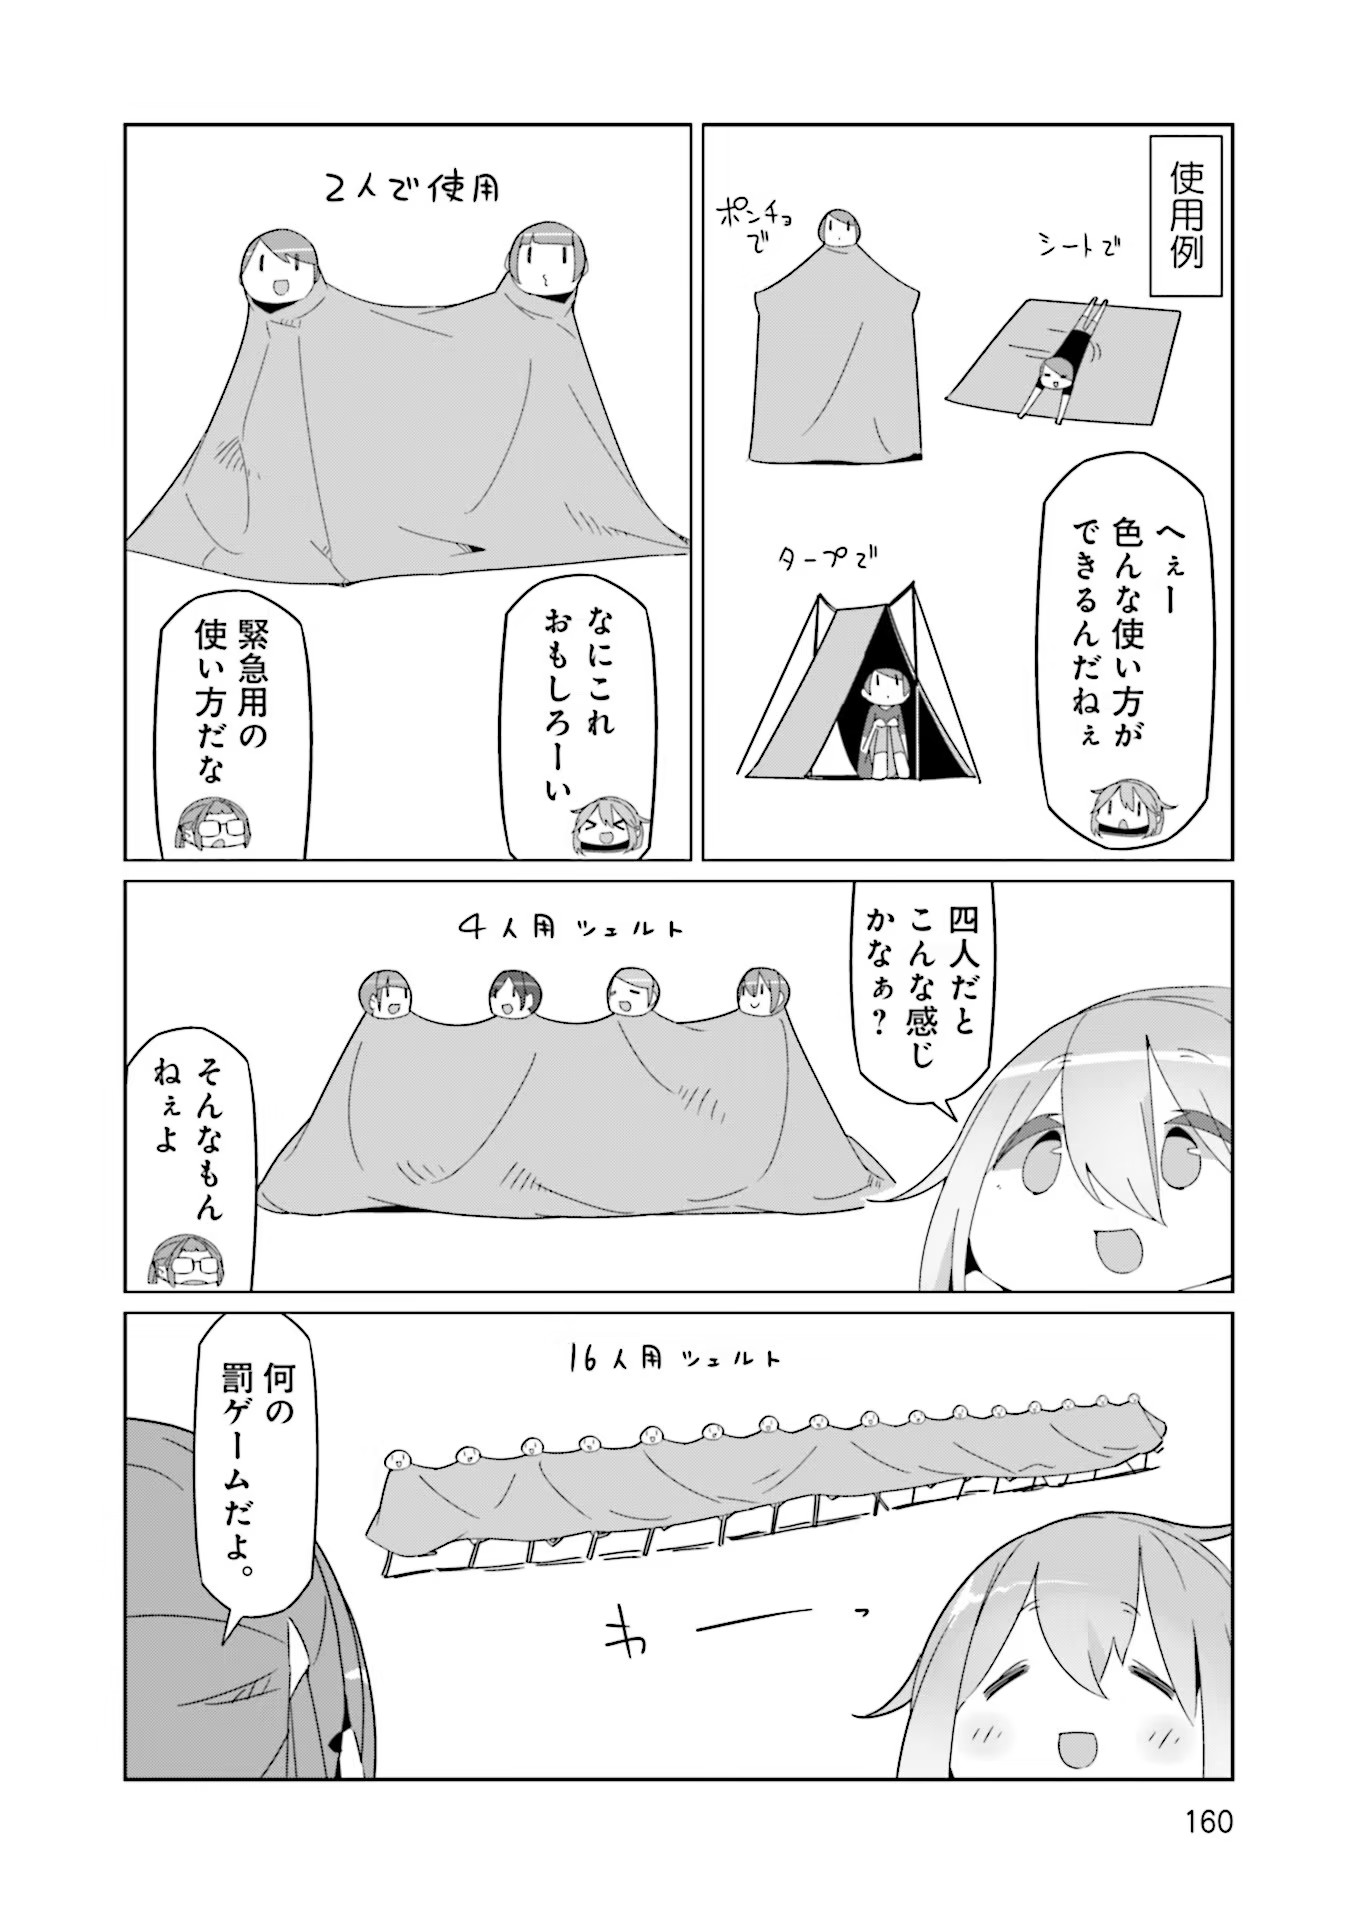 Yuru Camp - Chapter 52.5 - Page 2